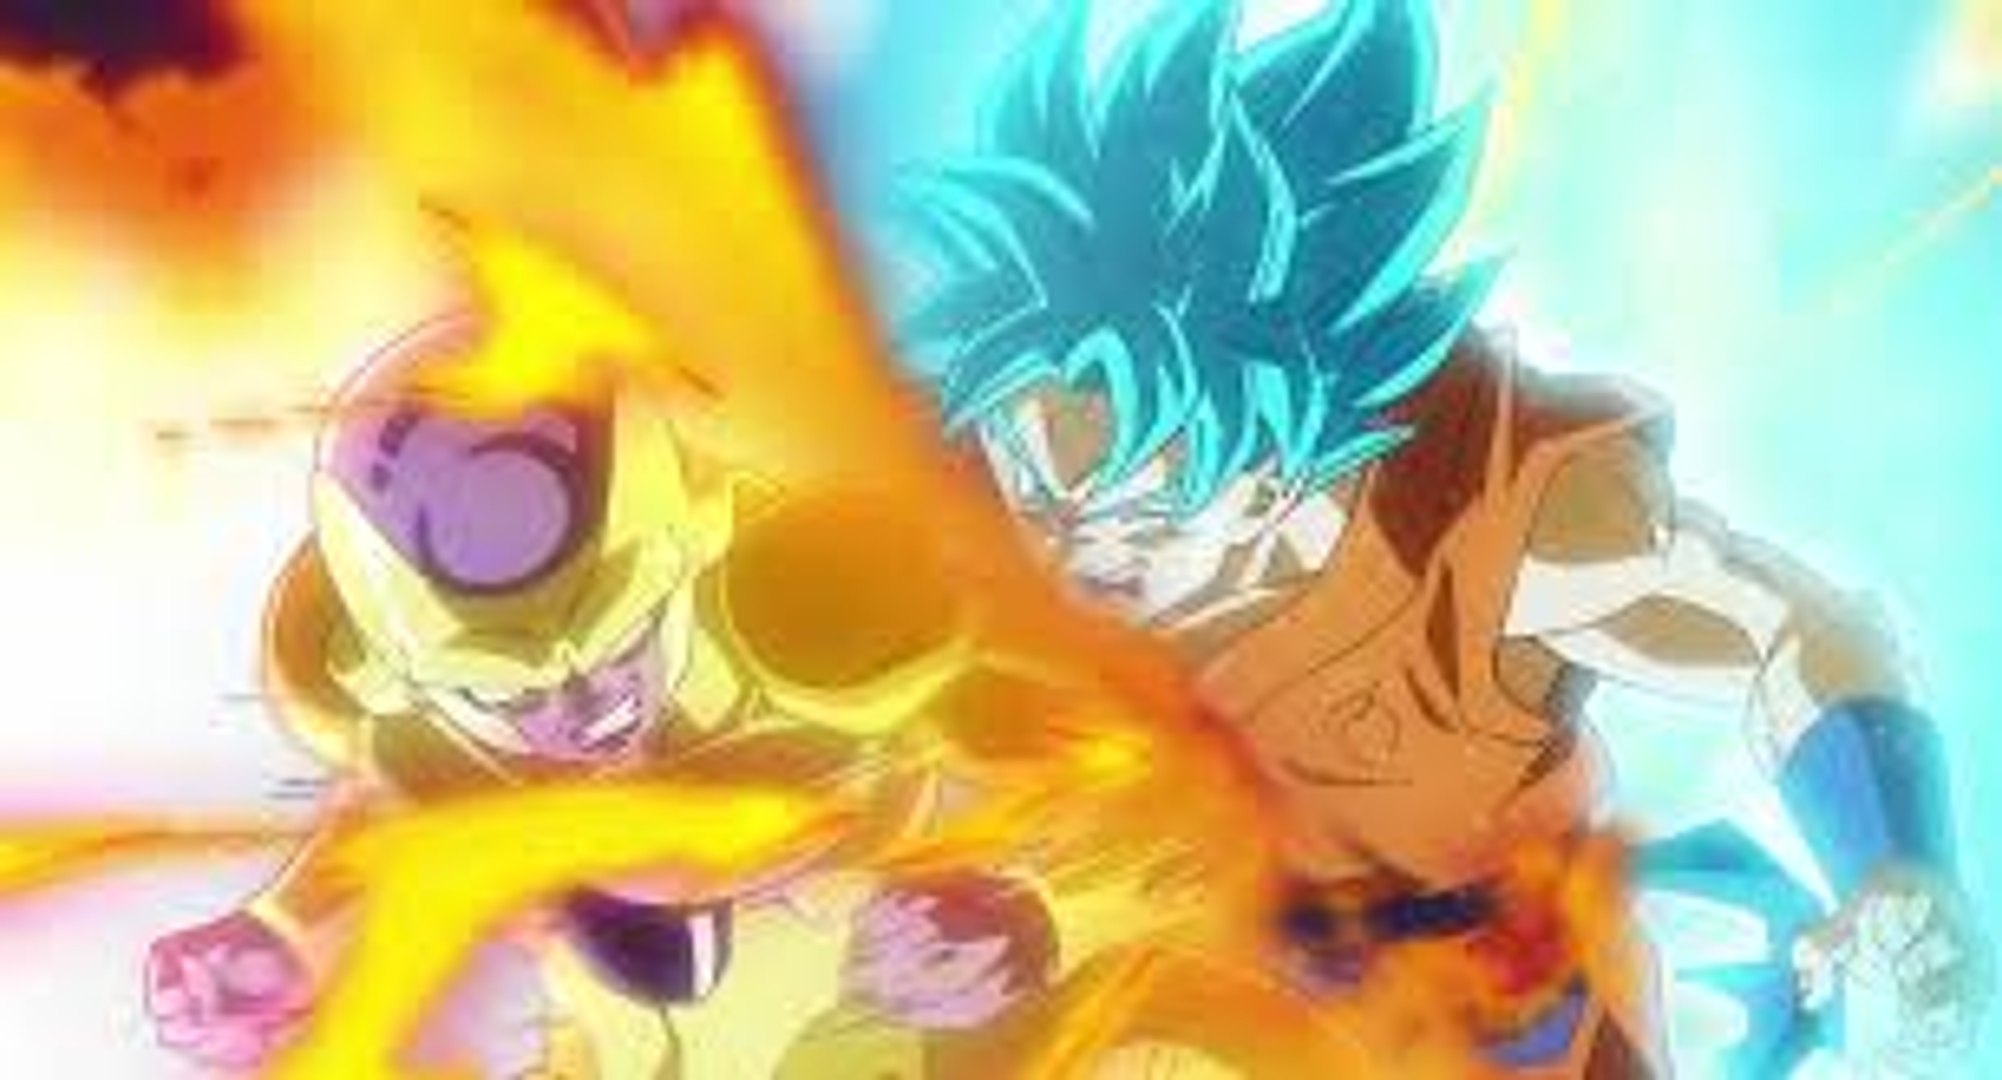 Animação Goku vs Freeza (Cel frames) - Vídeo Dailymotion